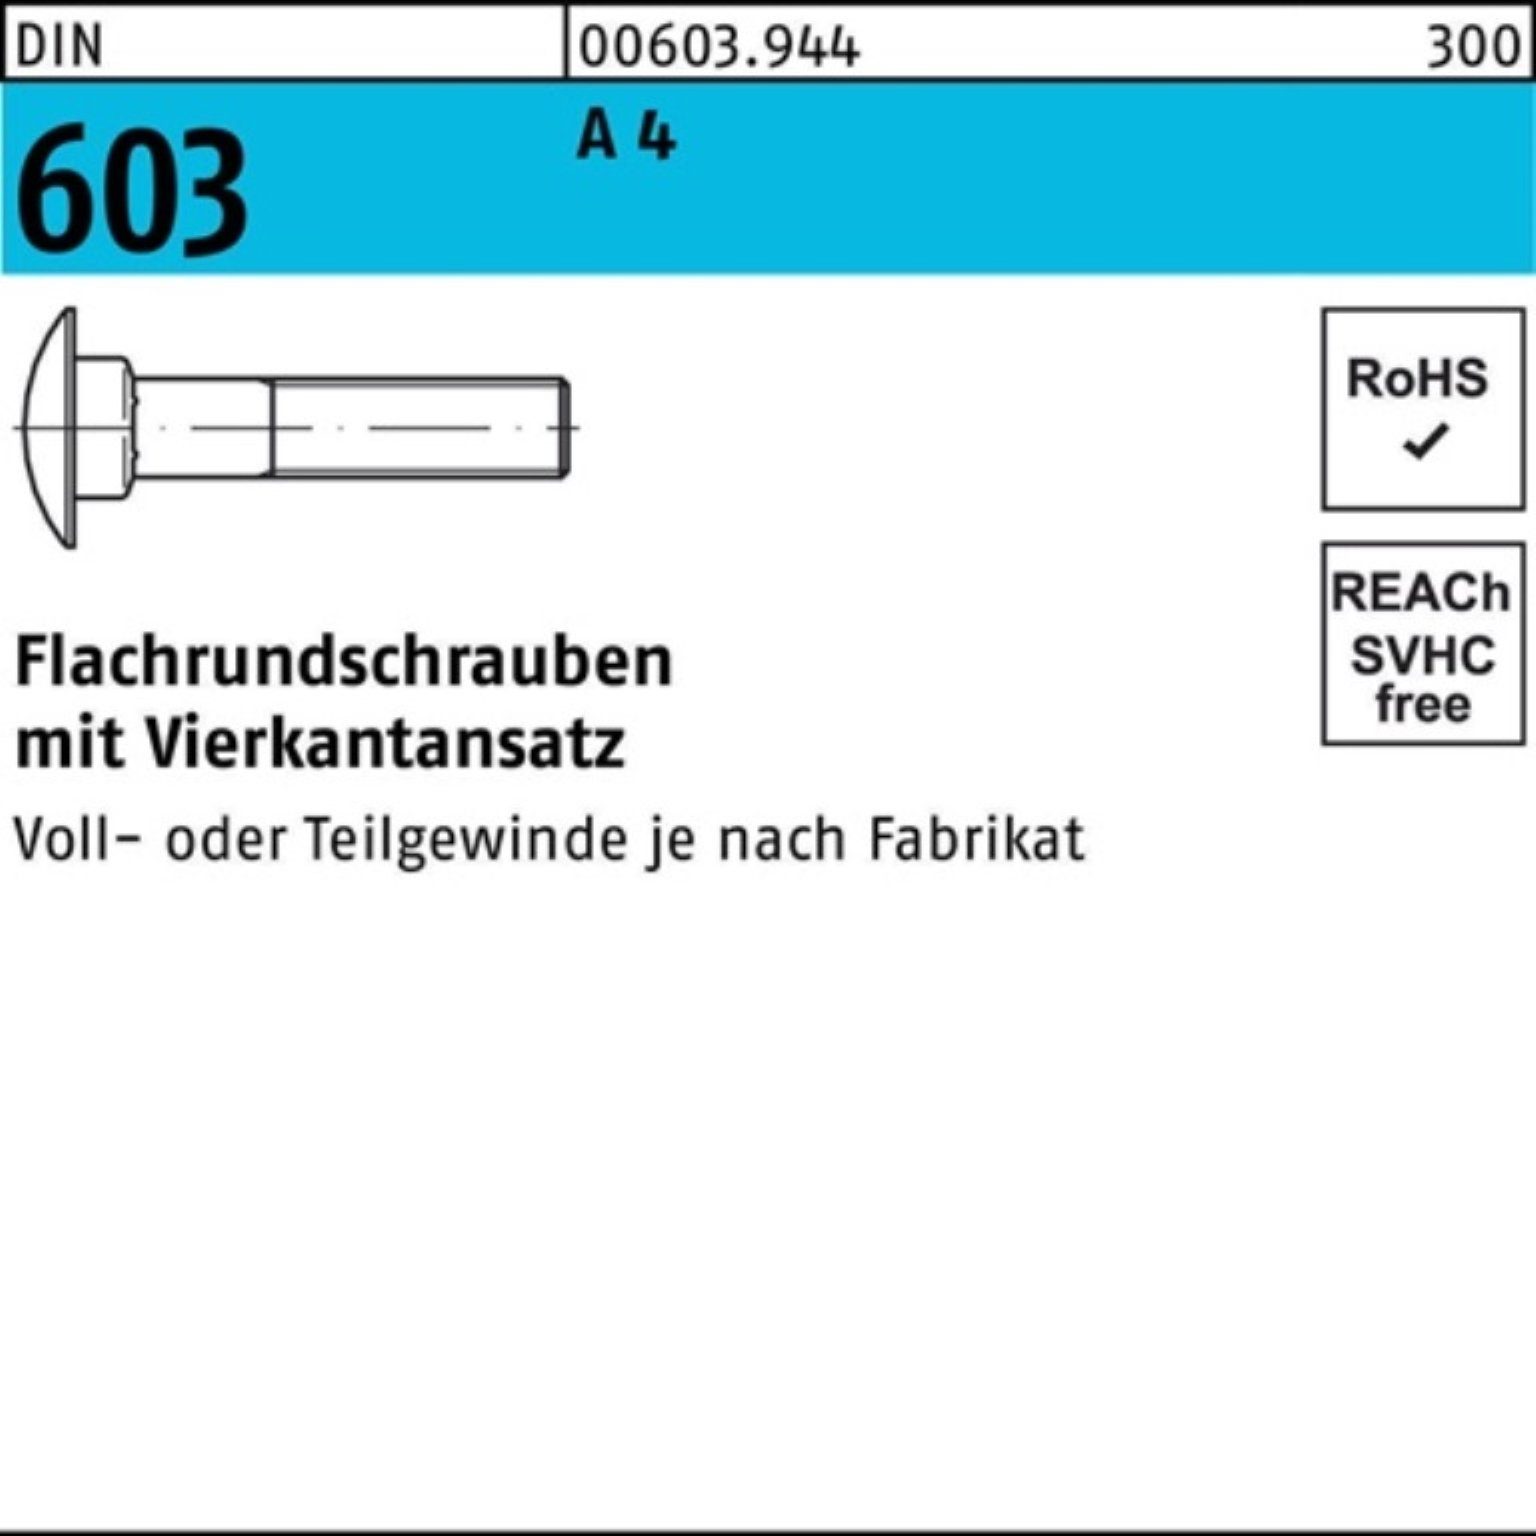 Reyher Schraube 100er Pack Flachrundschraube DIN 603 Vierkantansatz M16x 140 A 4 1 St